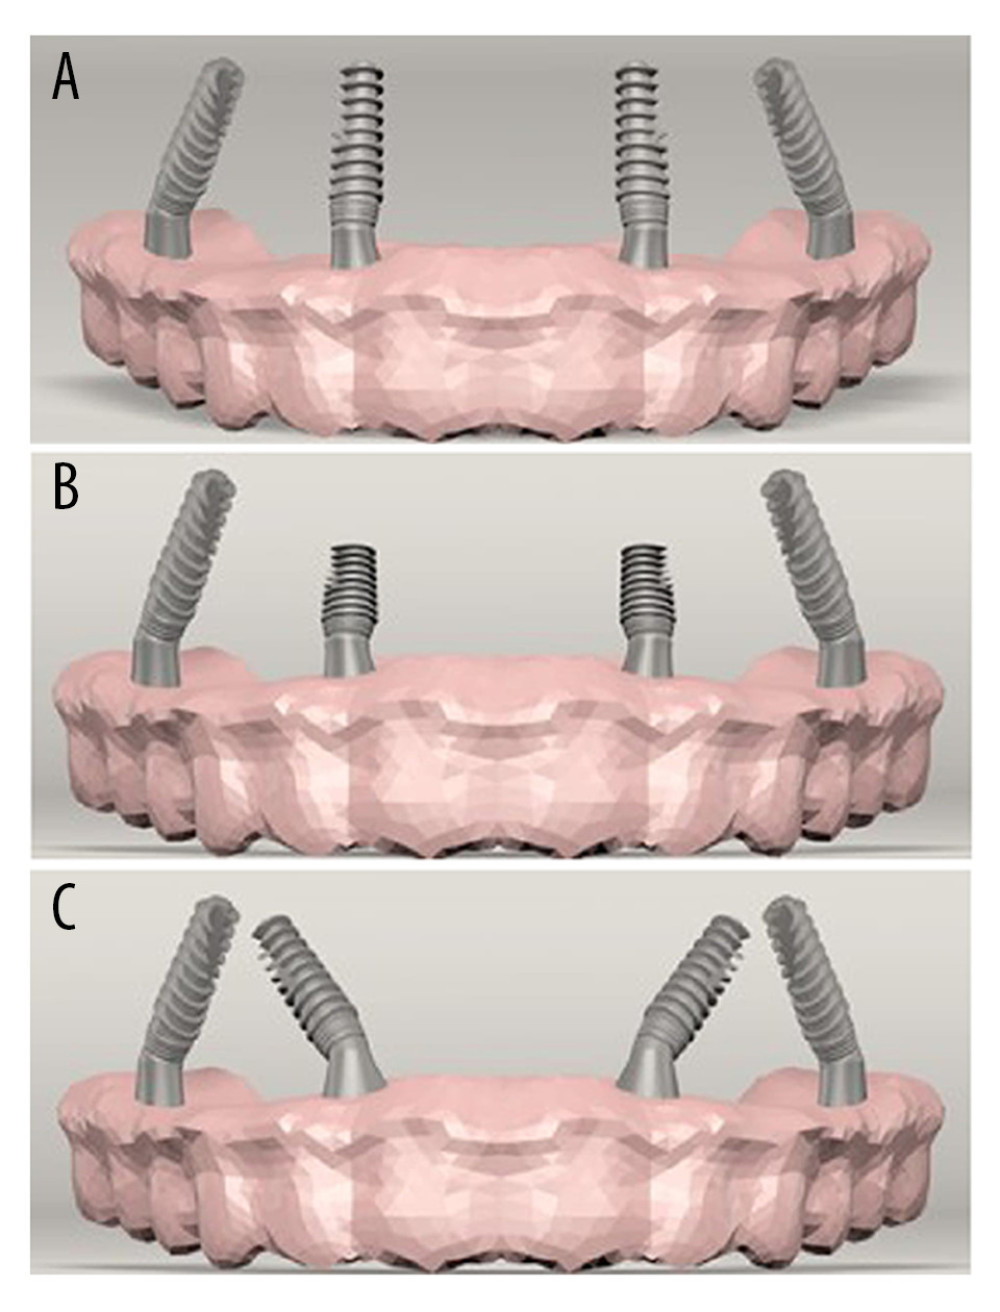 (A) Standard All-on-4 Model (Model 1). (B) All-on-4 Model with short implants (Model 2). (C) M-4 Model (Model 3).